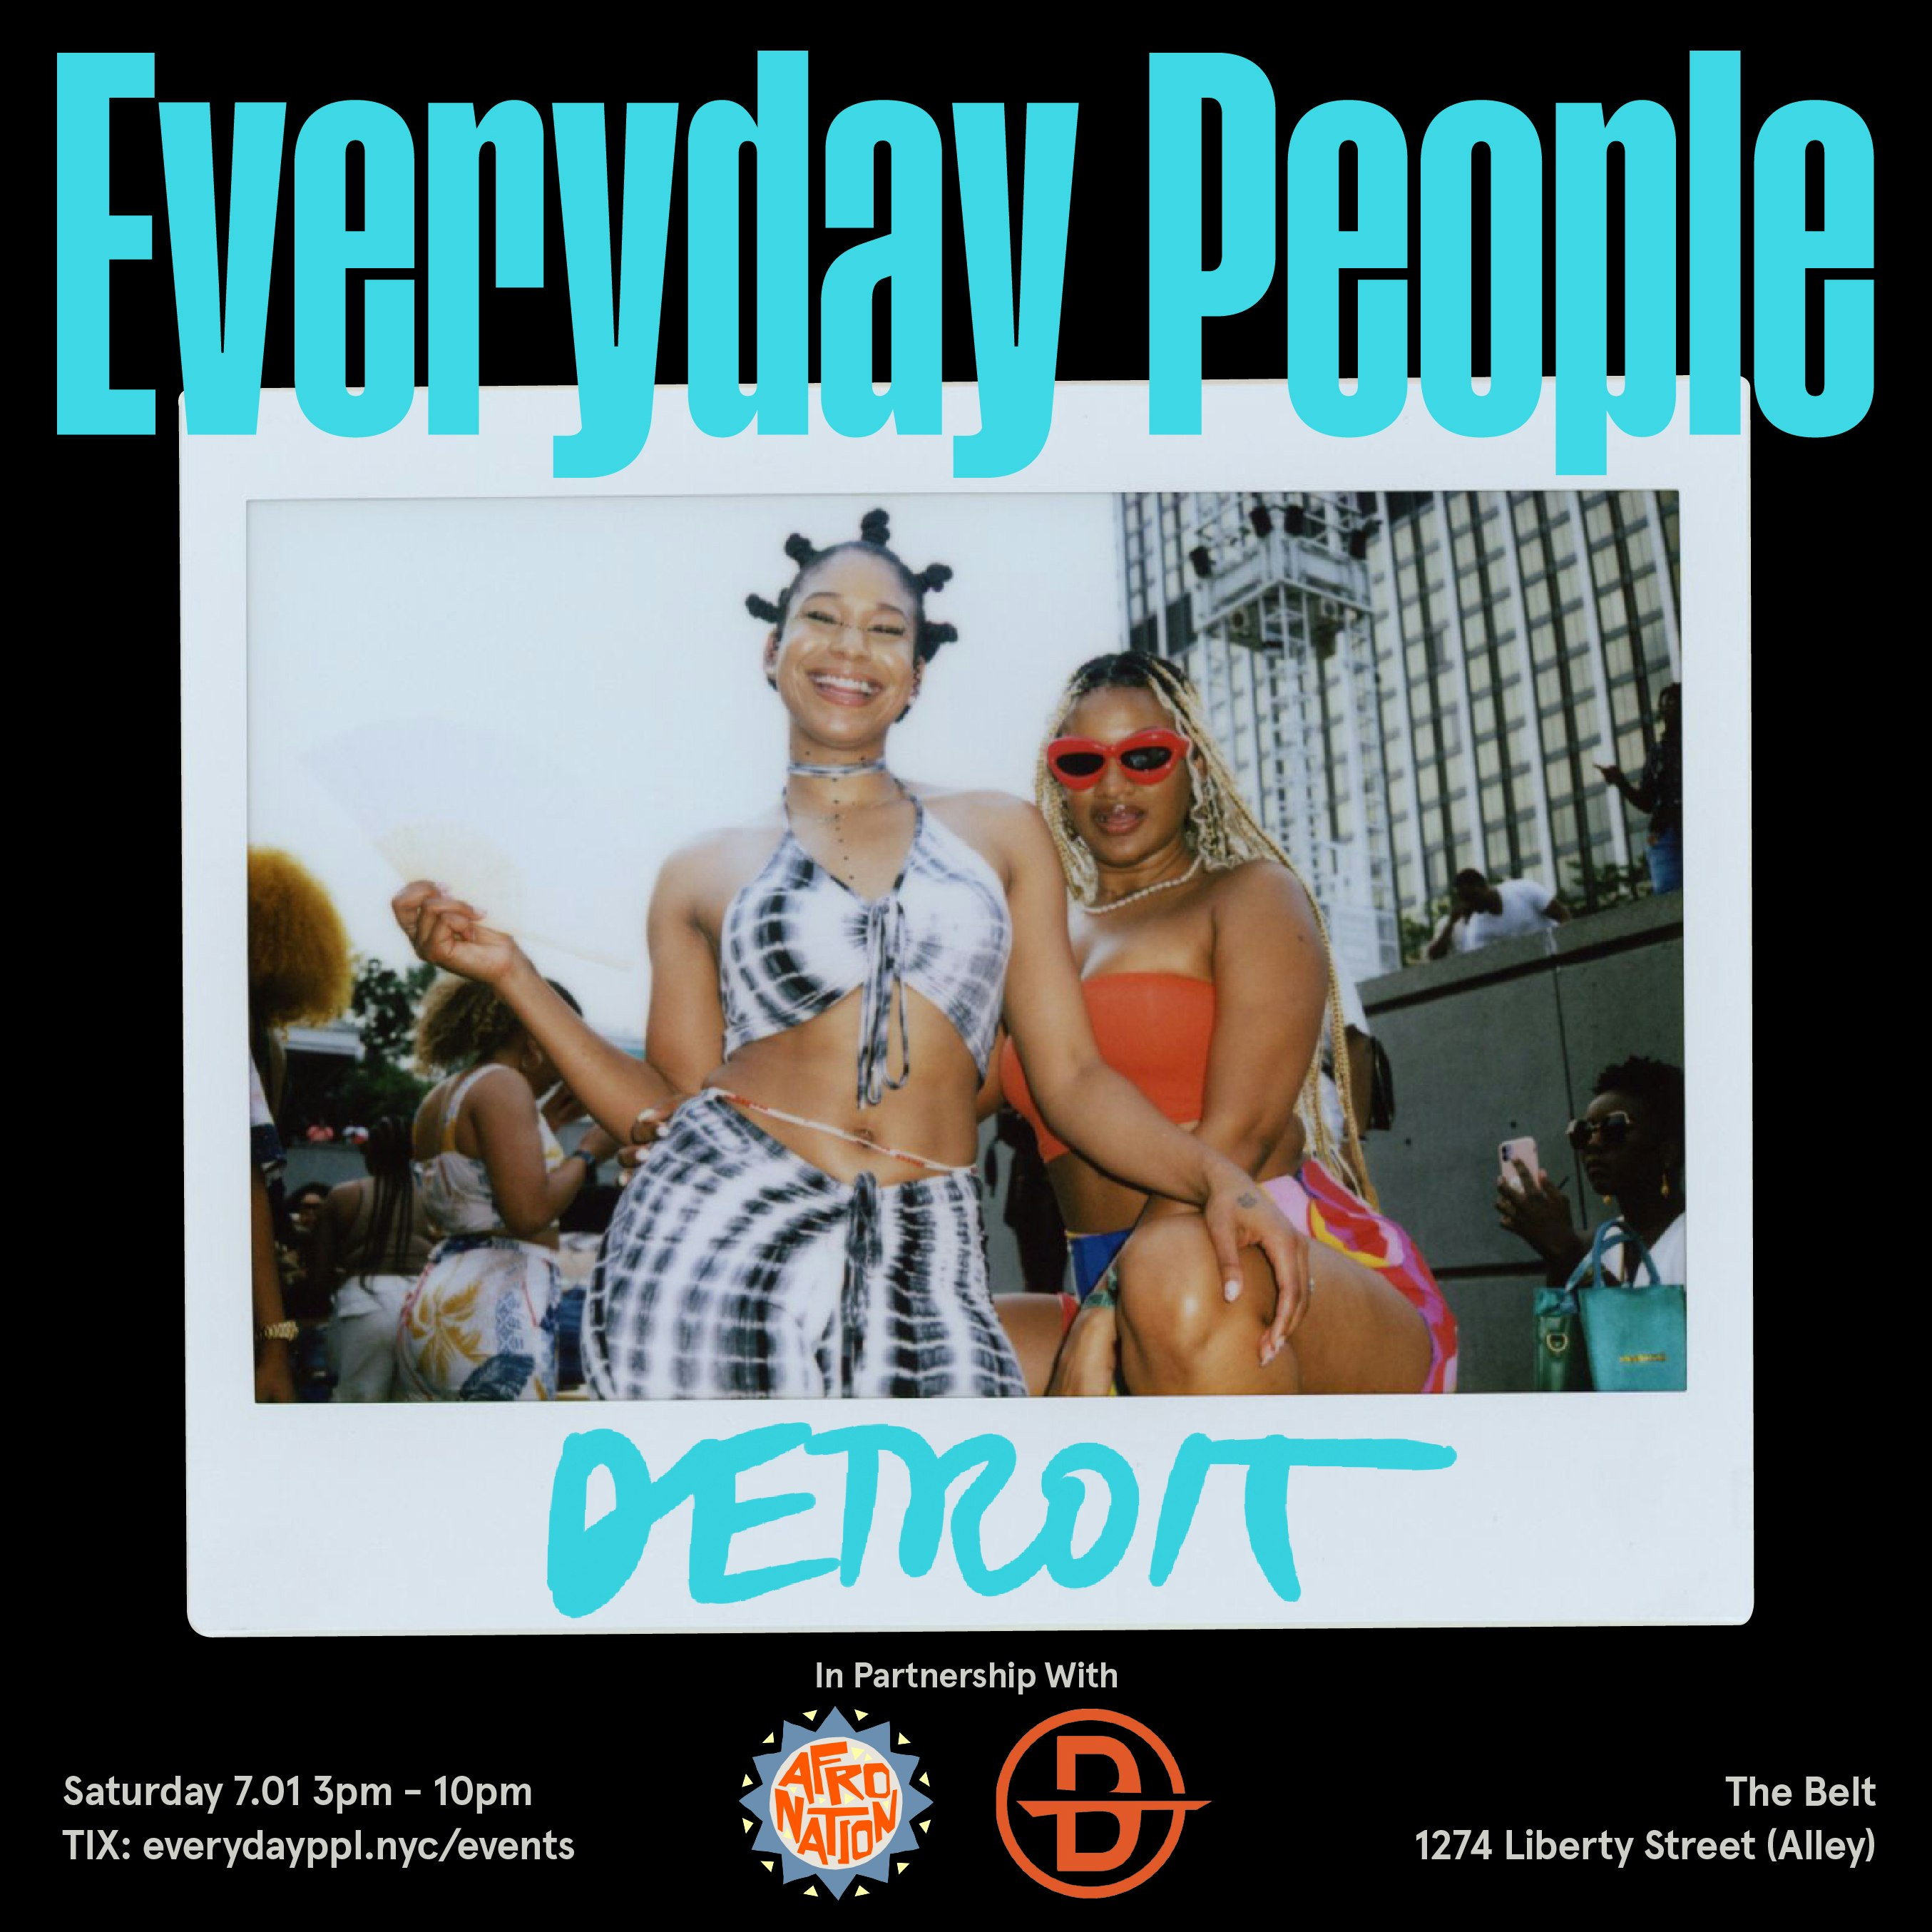 Everyday People Detroit w/ Afro Nation & Bedrock at The Belt on Jul 01